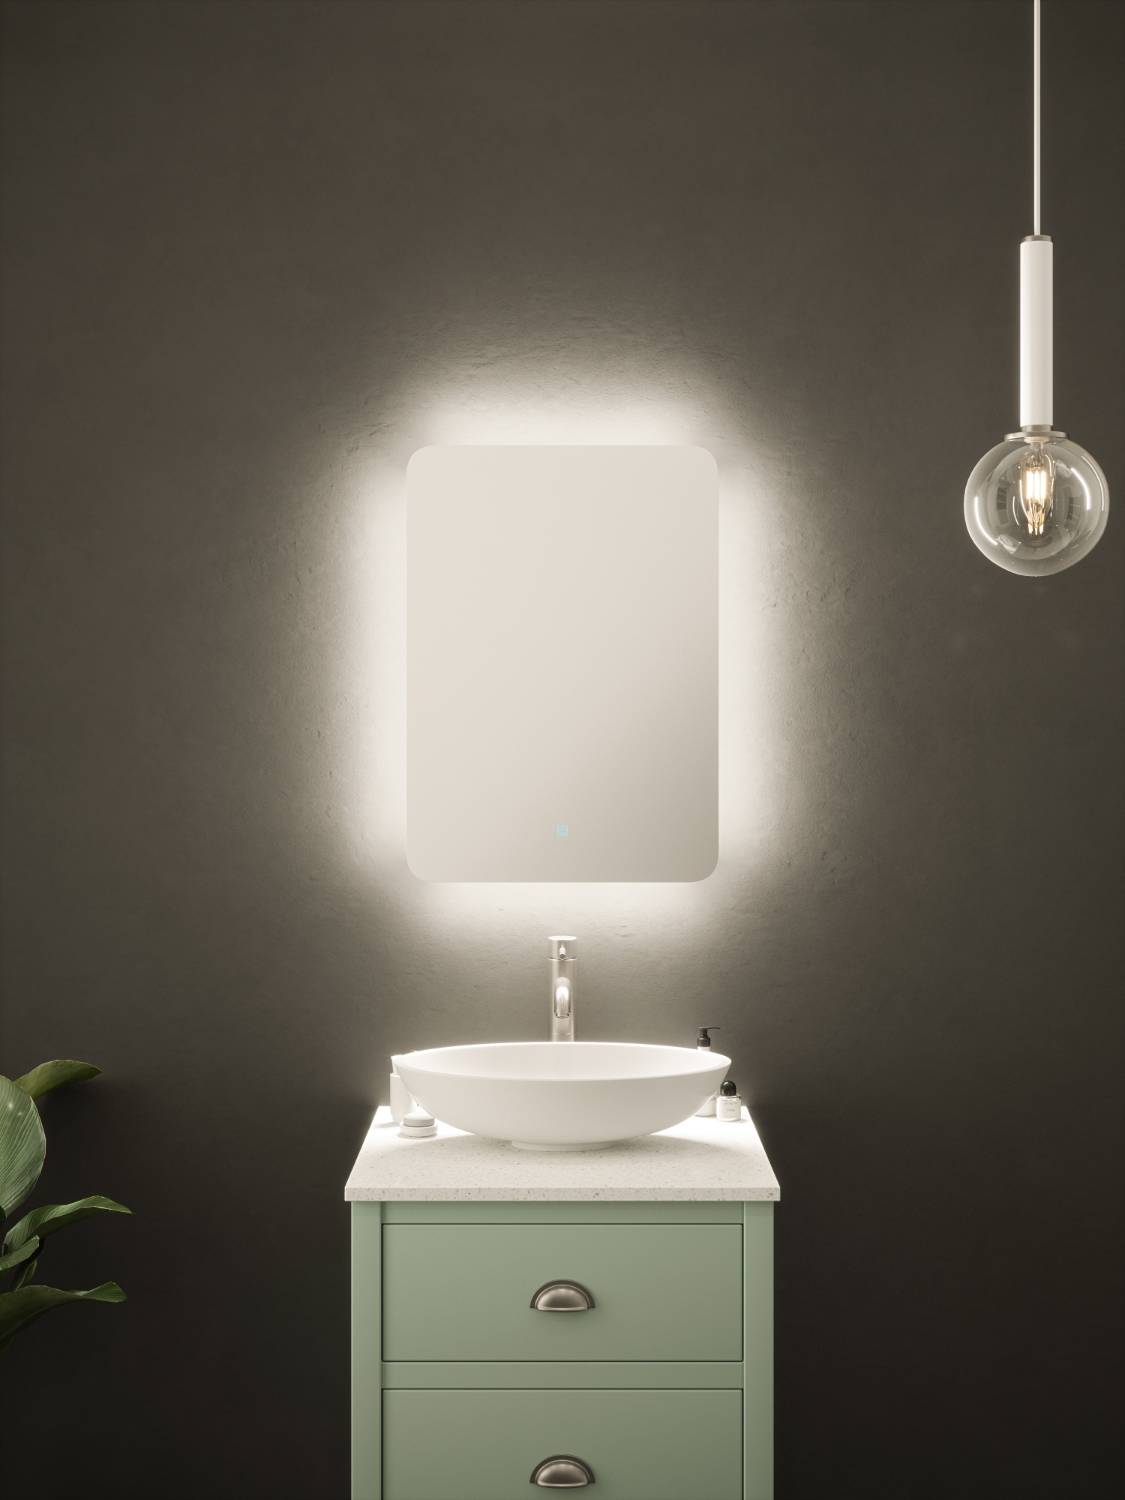 Mirror - Kingston Illuminated CCT LED Mirror - SY9047 - LED Mirror with Lighting